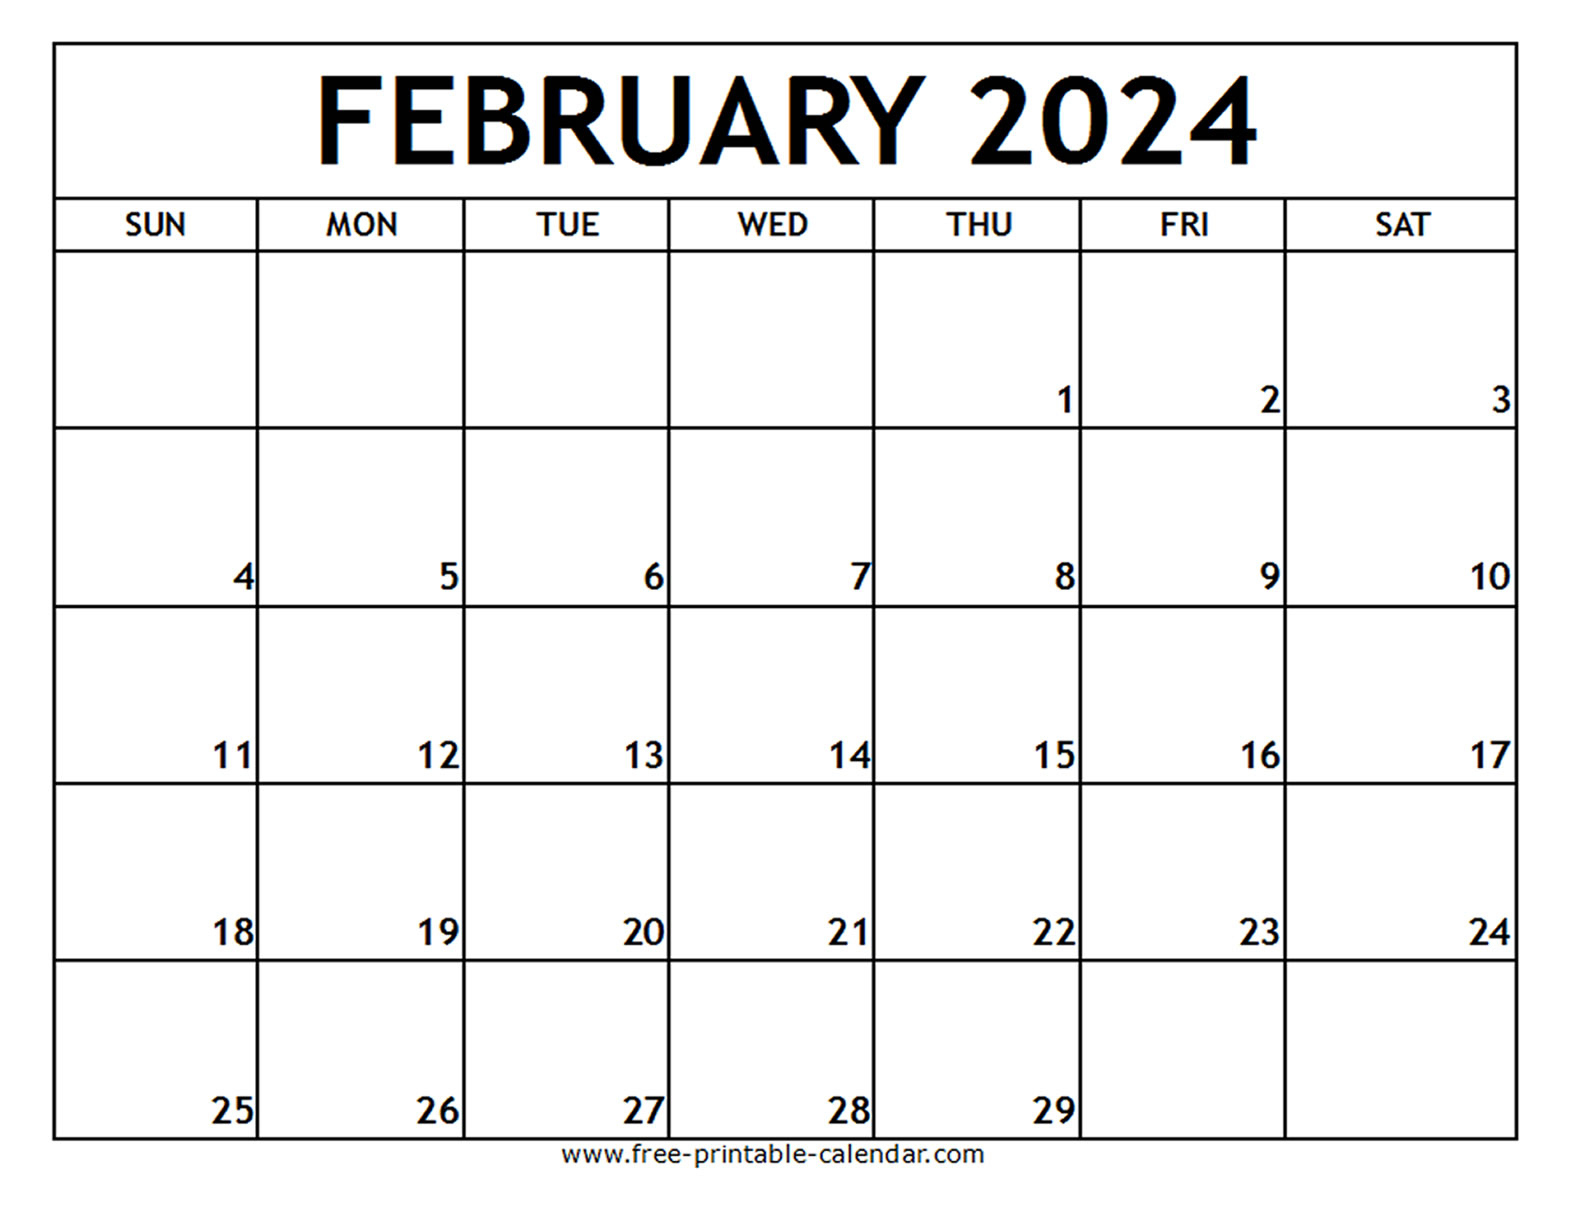 February 2024 Printable Calendar - Free-Printable-Calendar | 2024 Printable Calendar By Month Australia